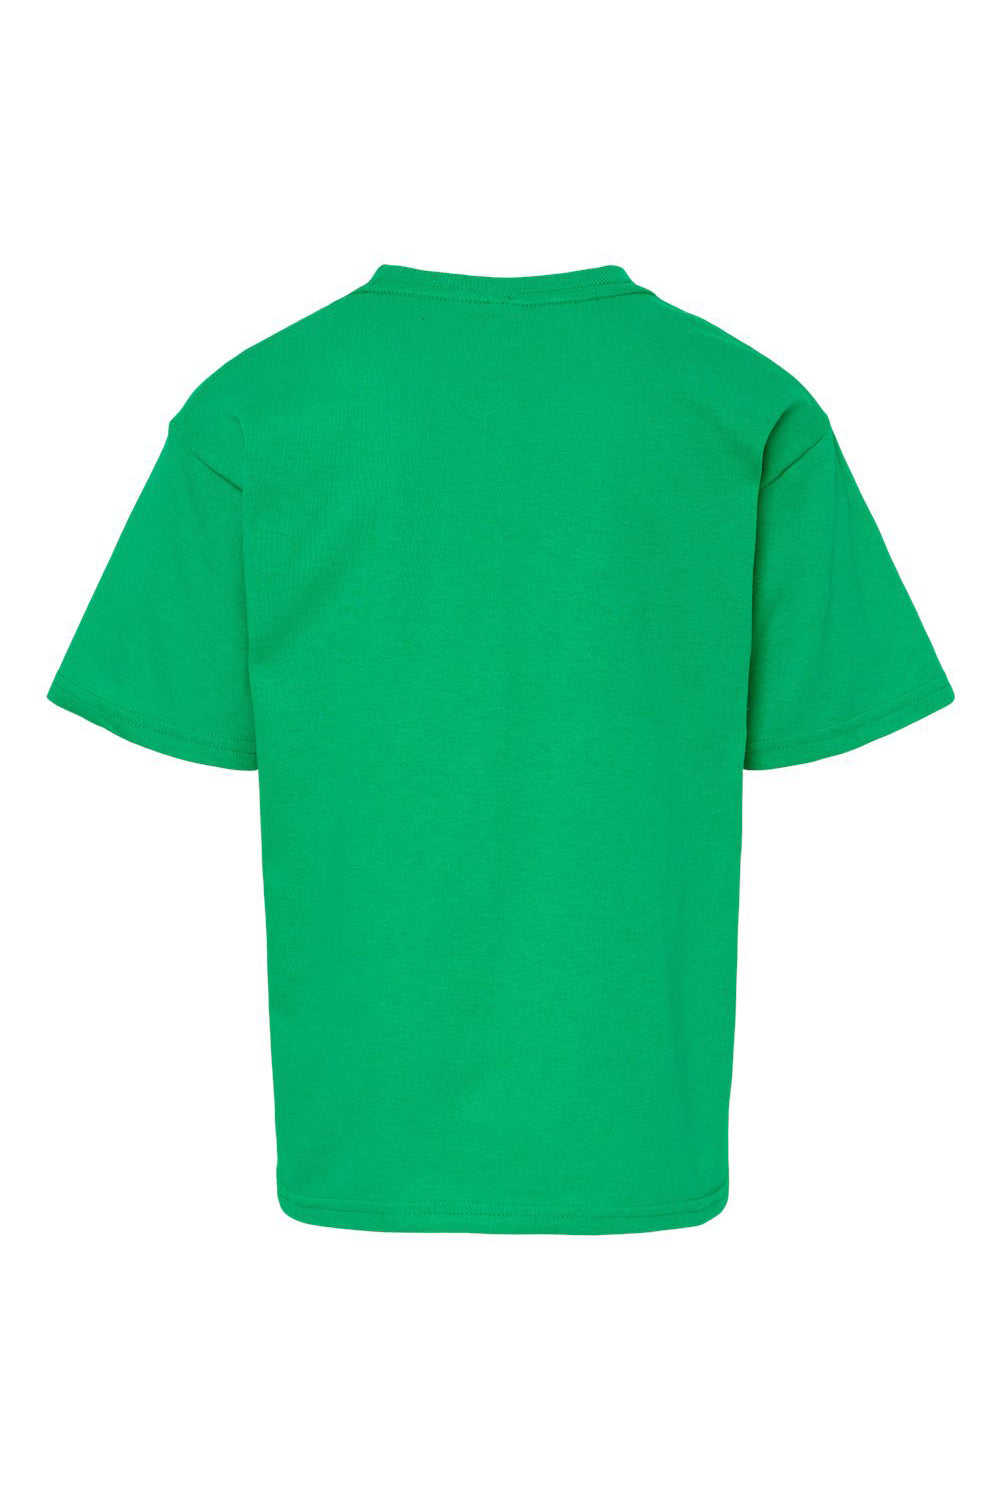 M&O 4850 Youth Gold Soft Touch Short Sleeve Crewneck T-Shirt Irish Green Flat Back